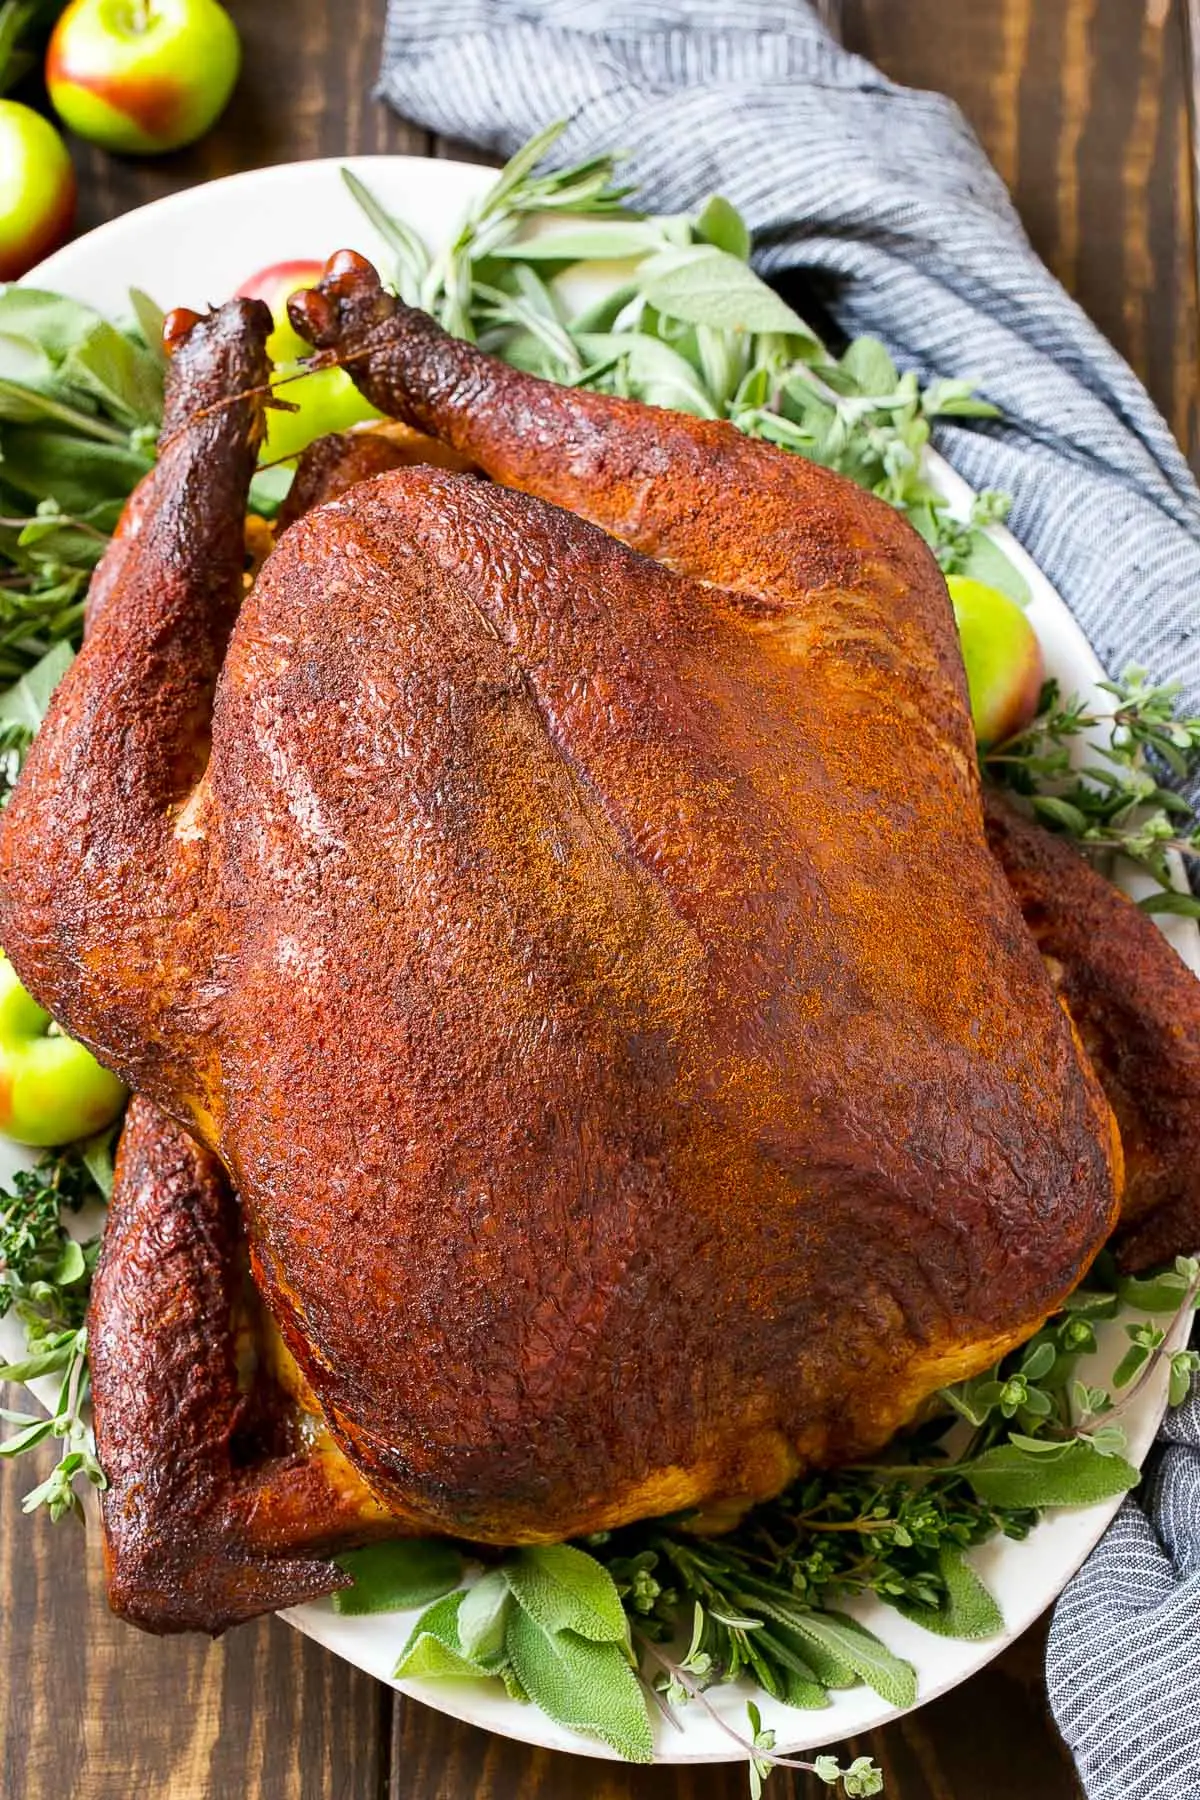 easy smoked turkey recipe - What not to do when smoking a turkey